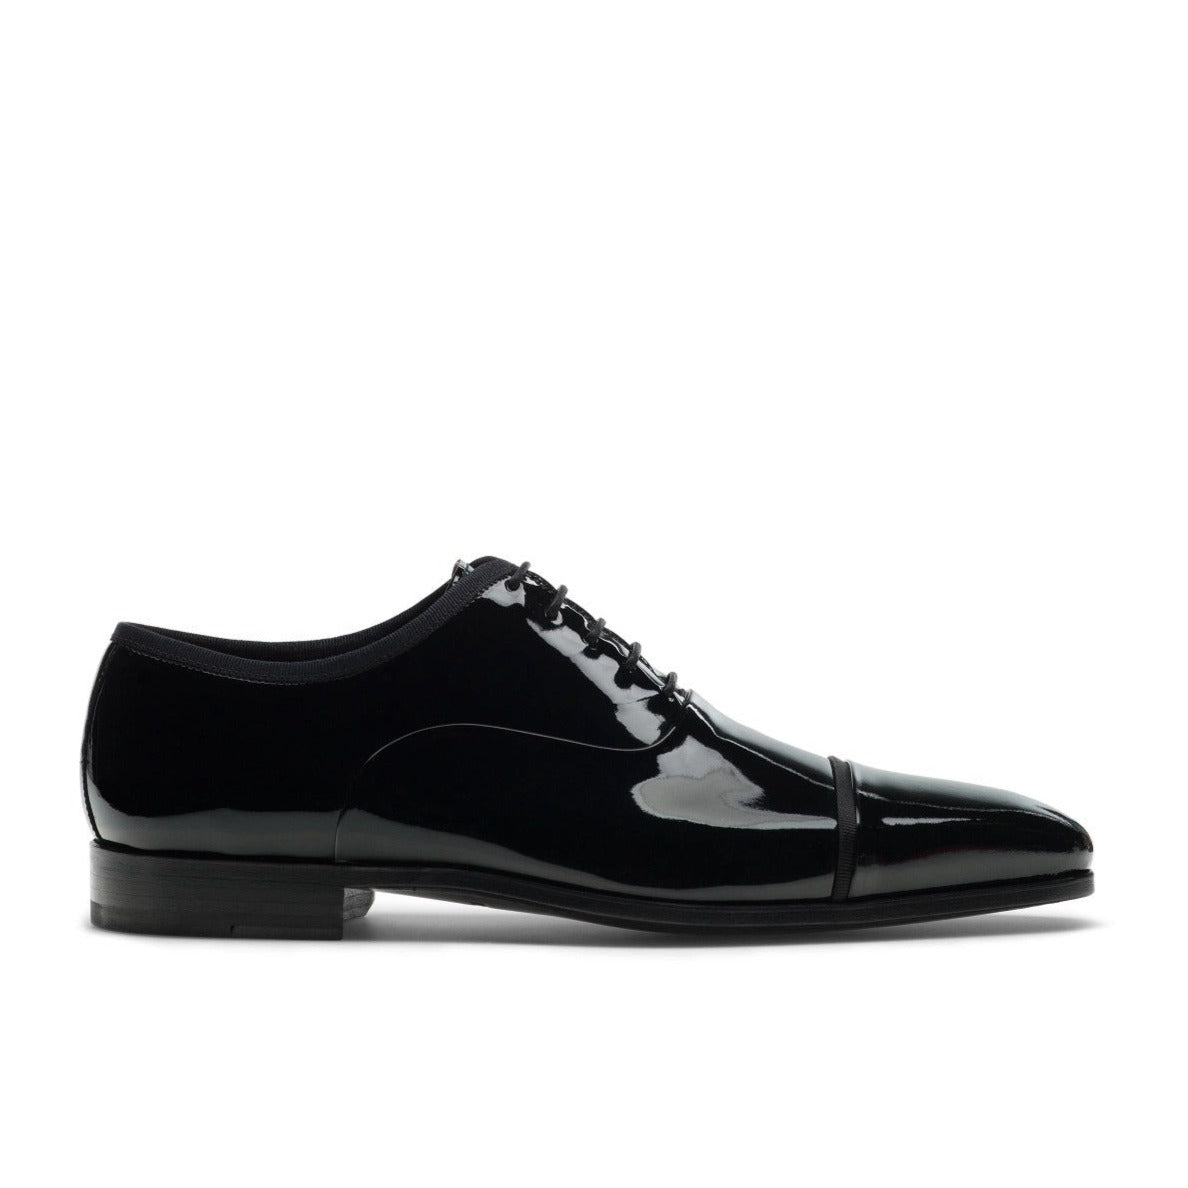 Magnanni 24534 Jadiel Men's Shoes Black Patent Leather Formal / Dress ...